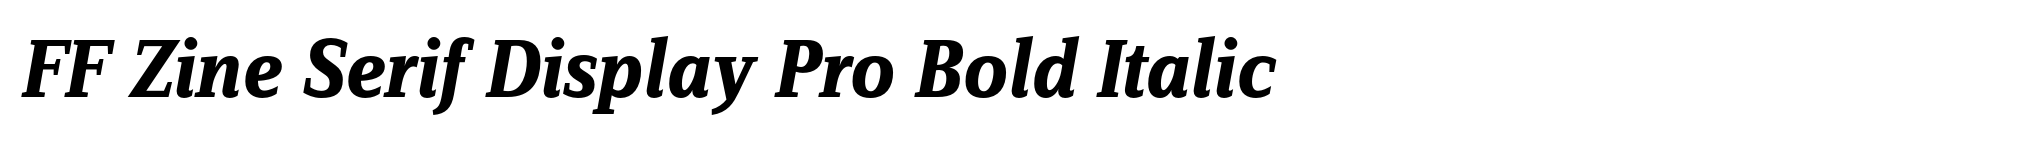 FF Zine Serif Display Pro Bold Italic image